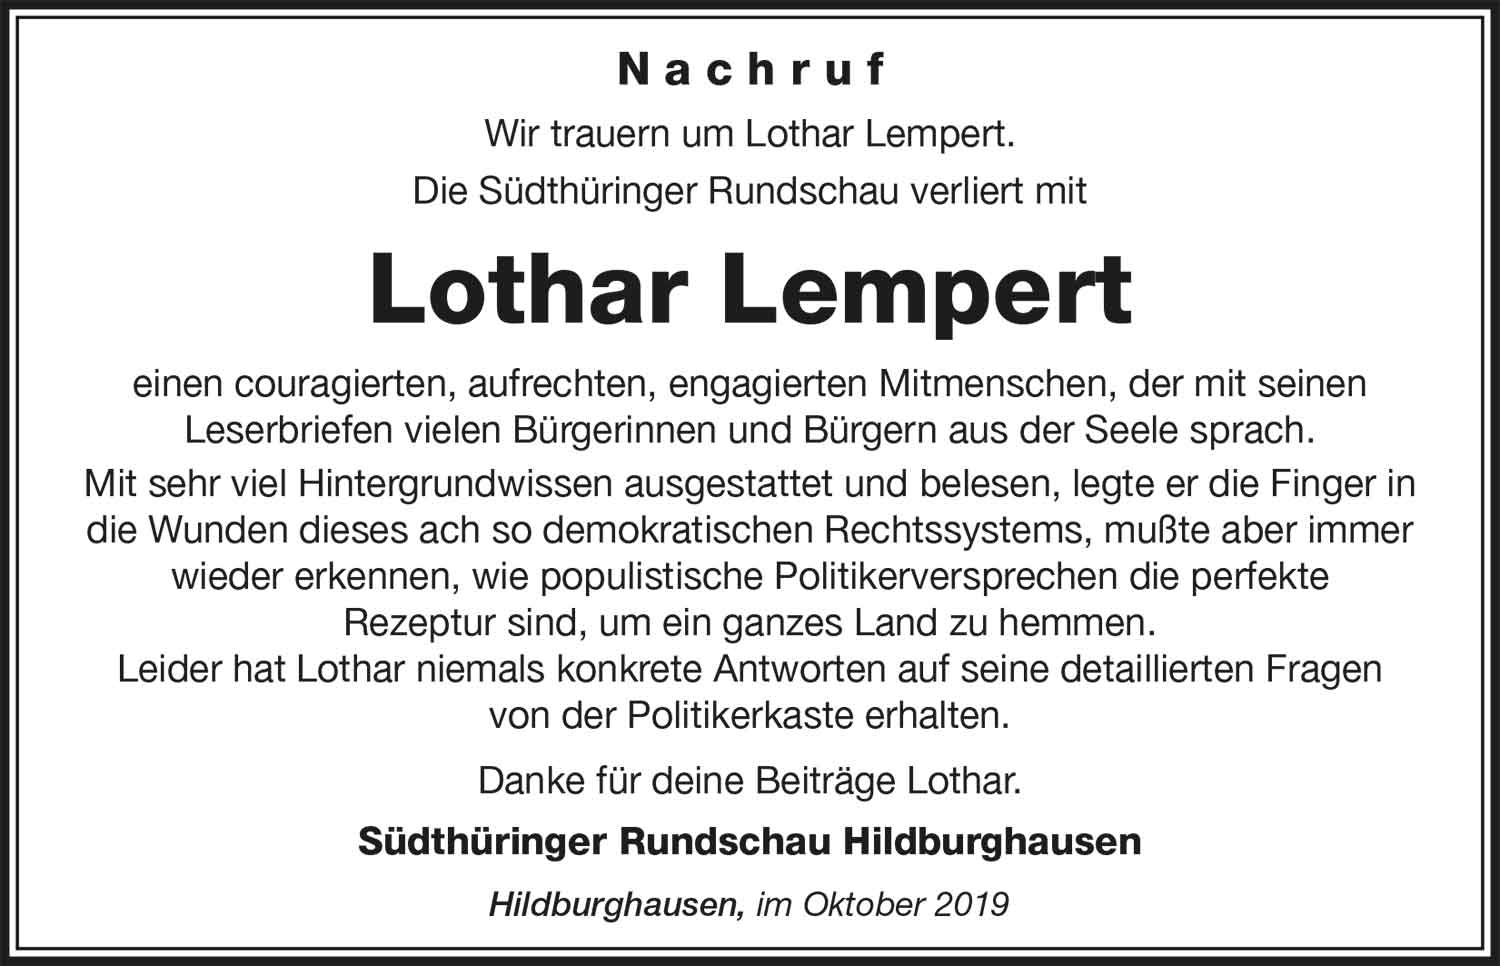 Nachruf_Lothar_Lempert_42_19